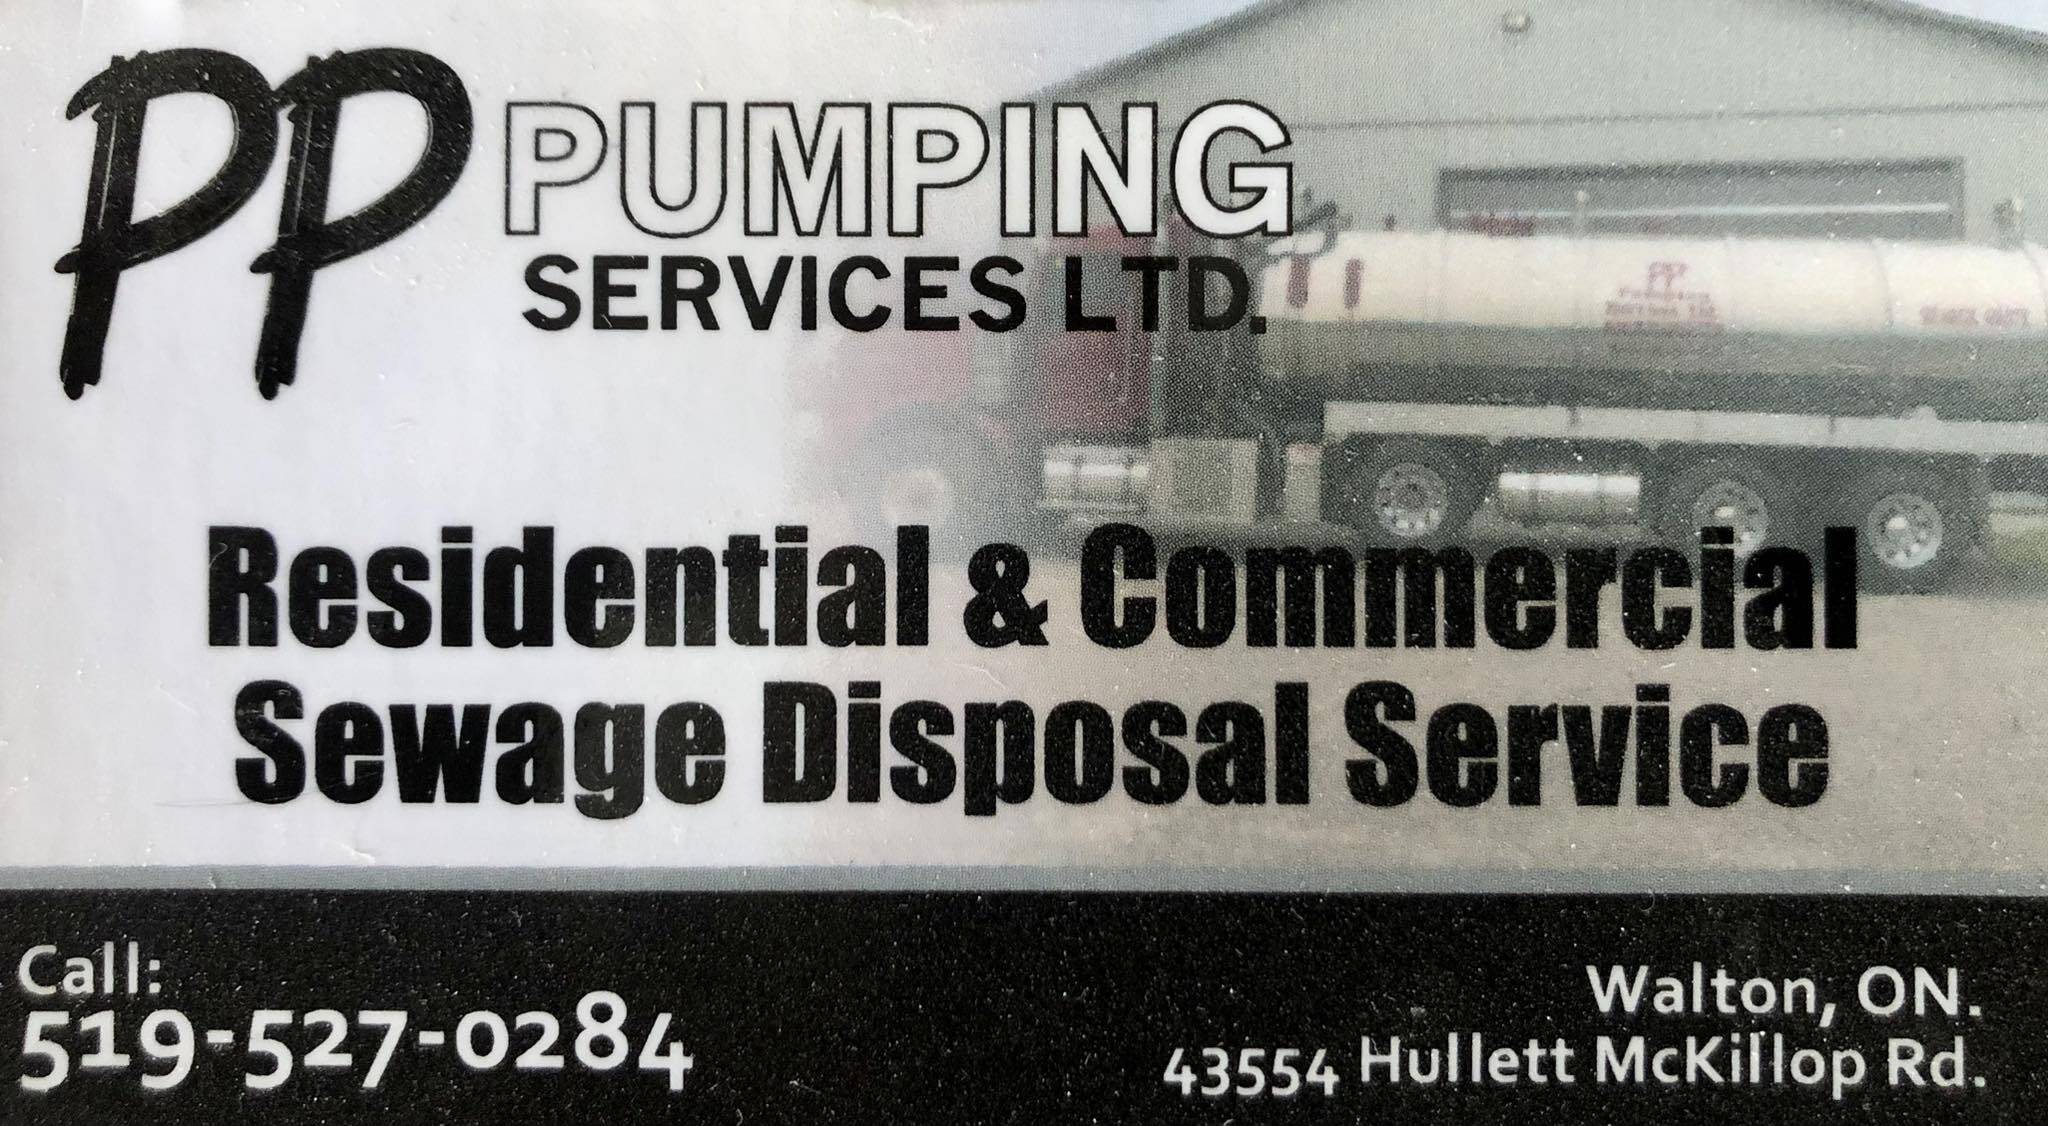 PP Pumping Services Ltd.